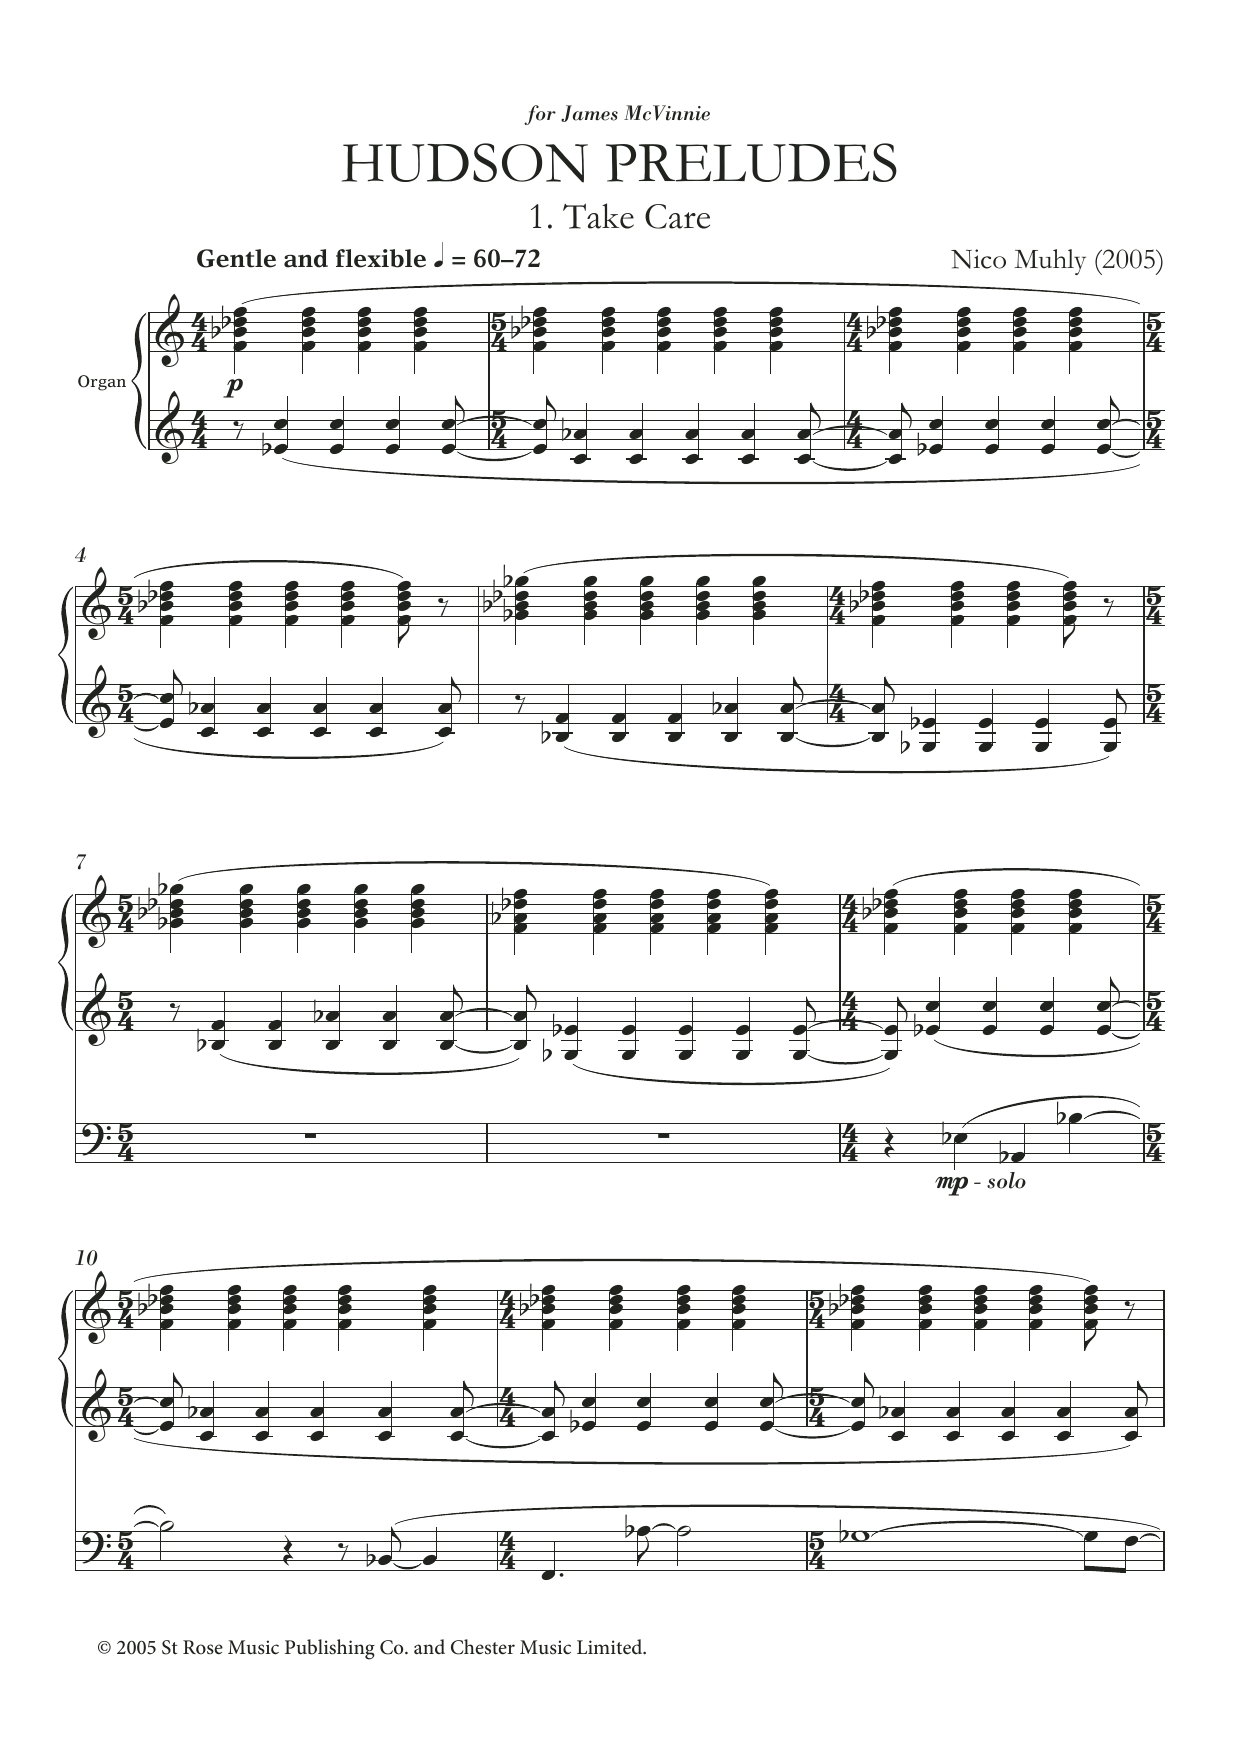 Nico Muhly Hudson Preludes Sheet Music Notes & Chords for Organ - Download or Print PDF